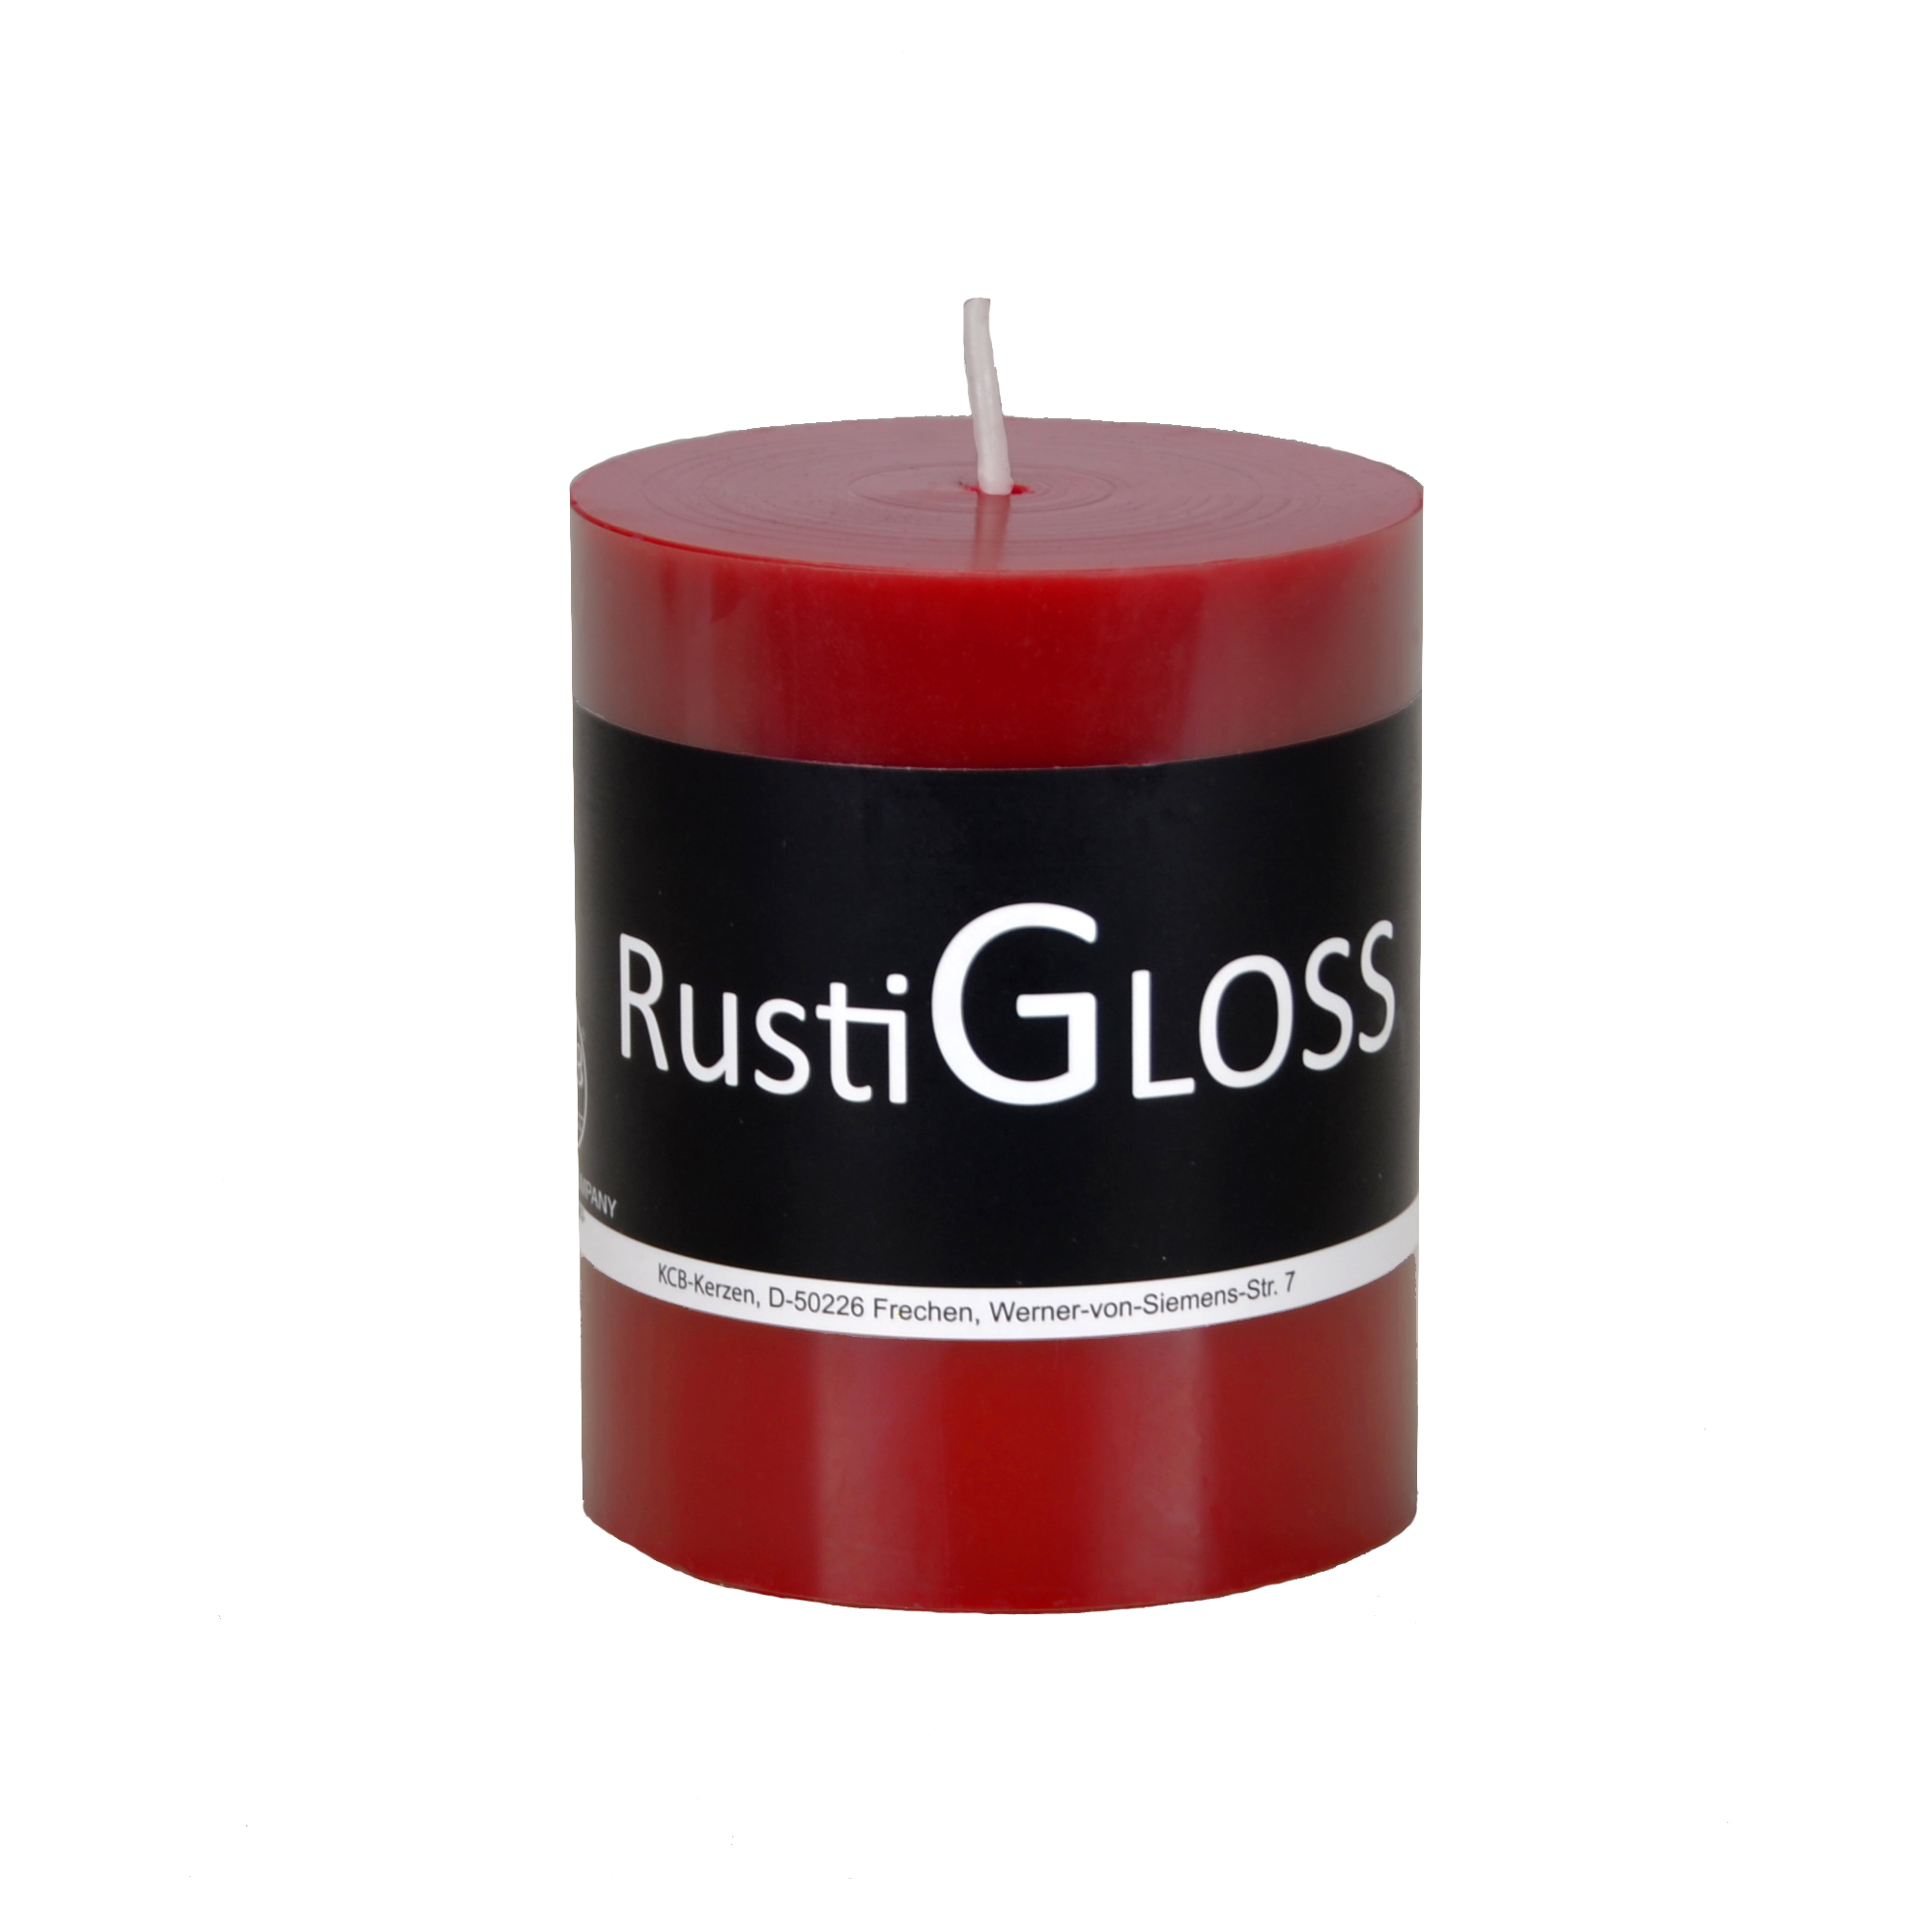 Stumpenkerze 'Rusti Gloss' karminrot Ø 6,8 x 8 cm + product picture